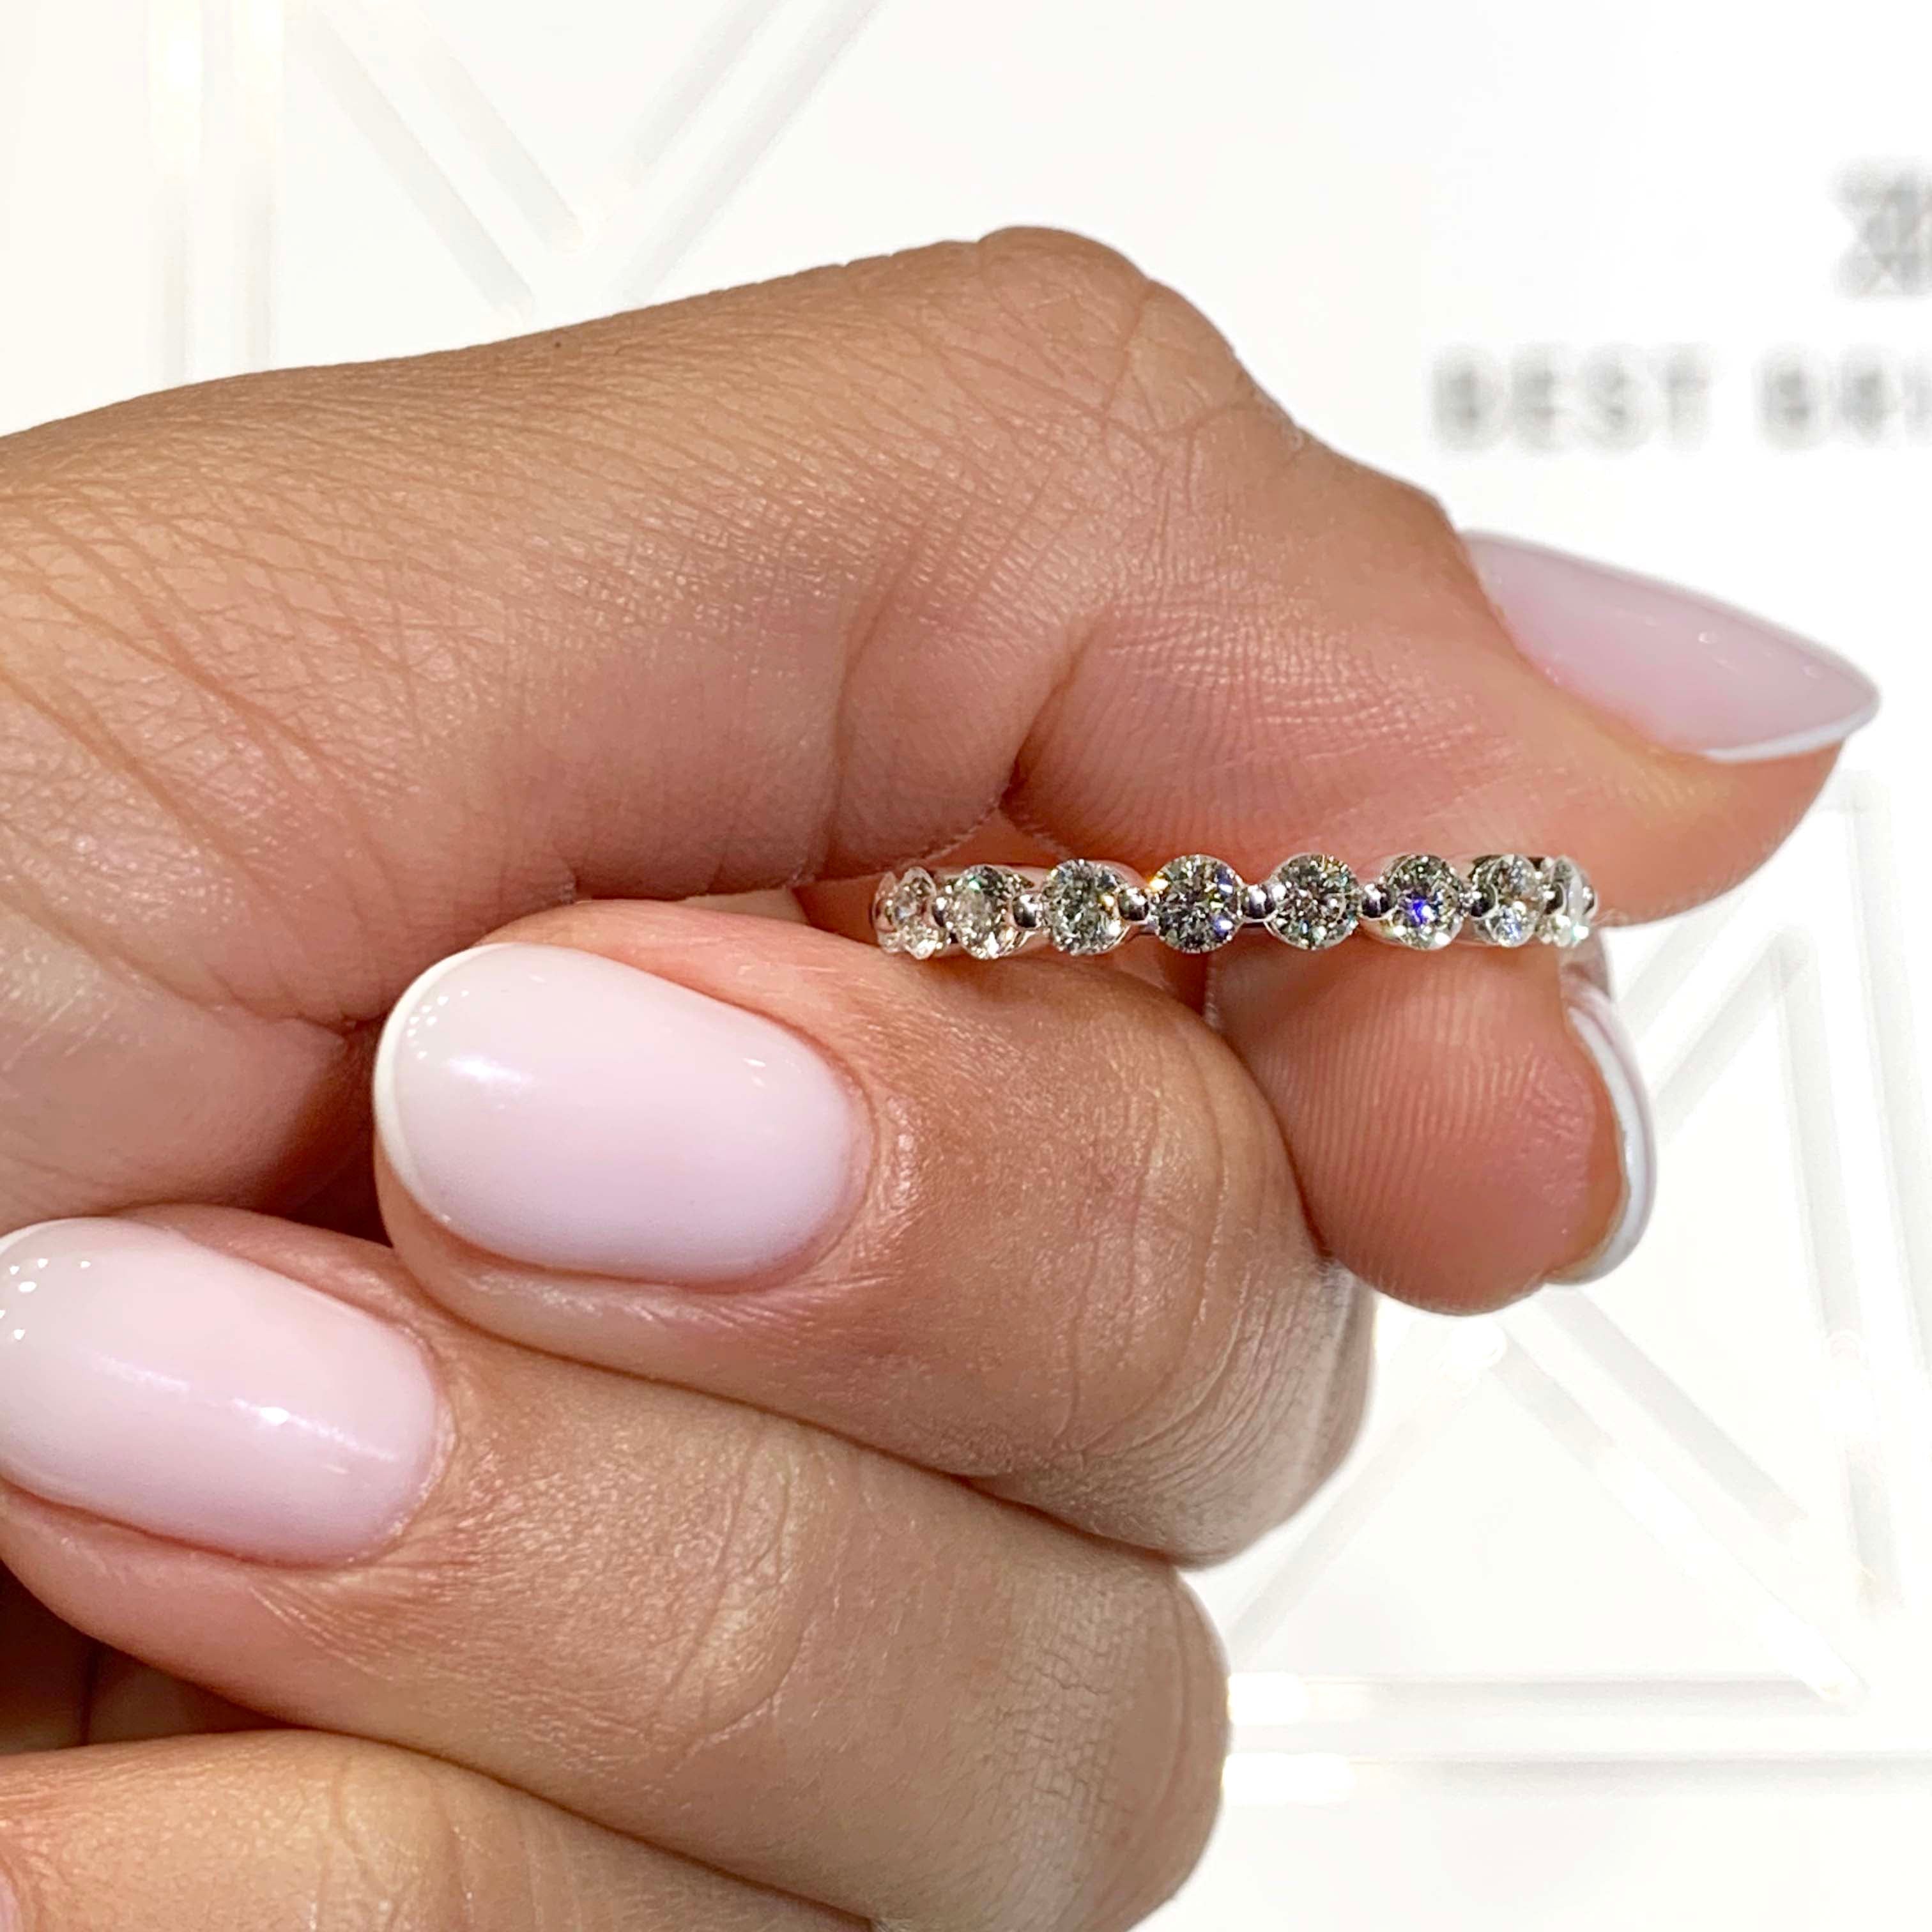 Josie Eternity Wedding Ring   (1.75 Carat) -18K White Gold